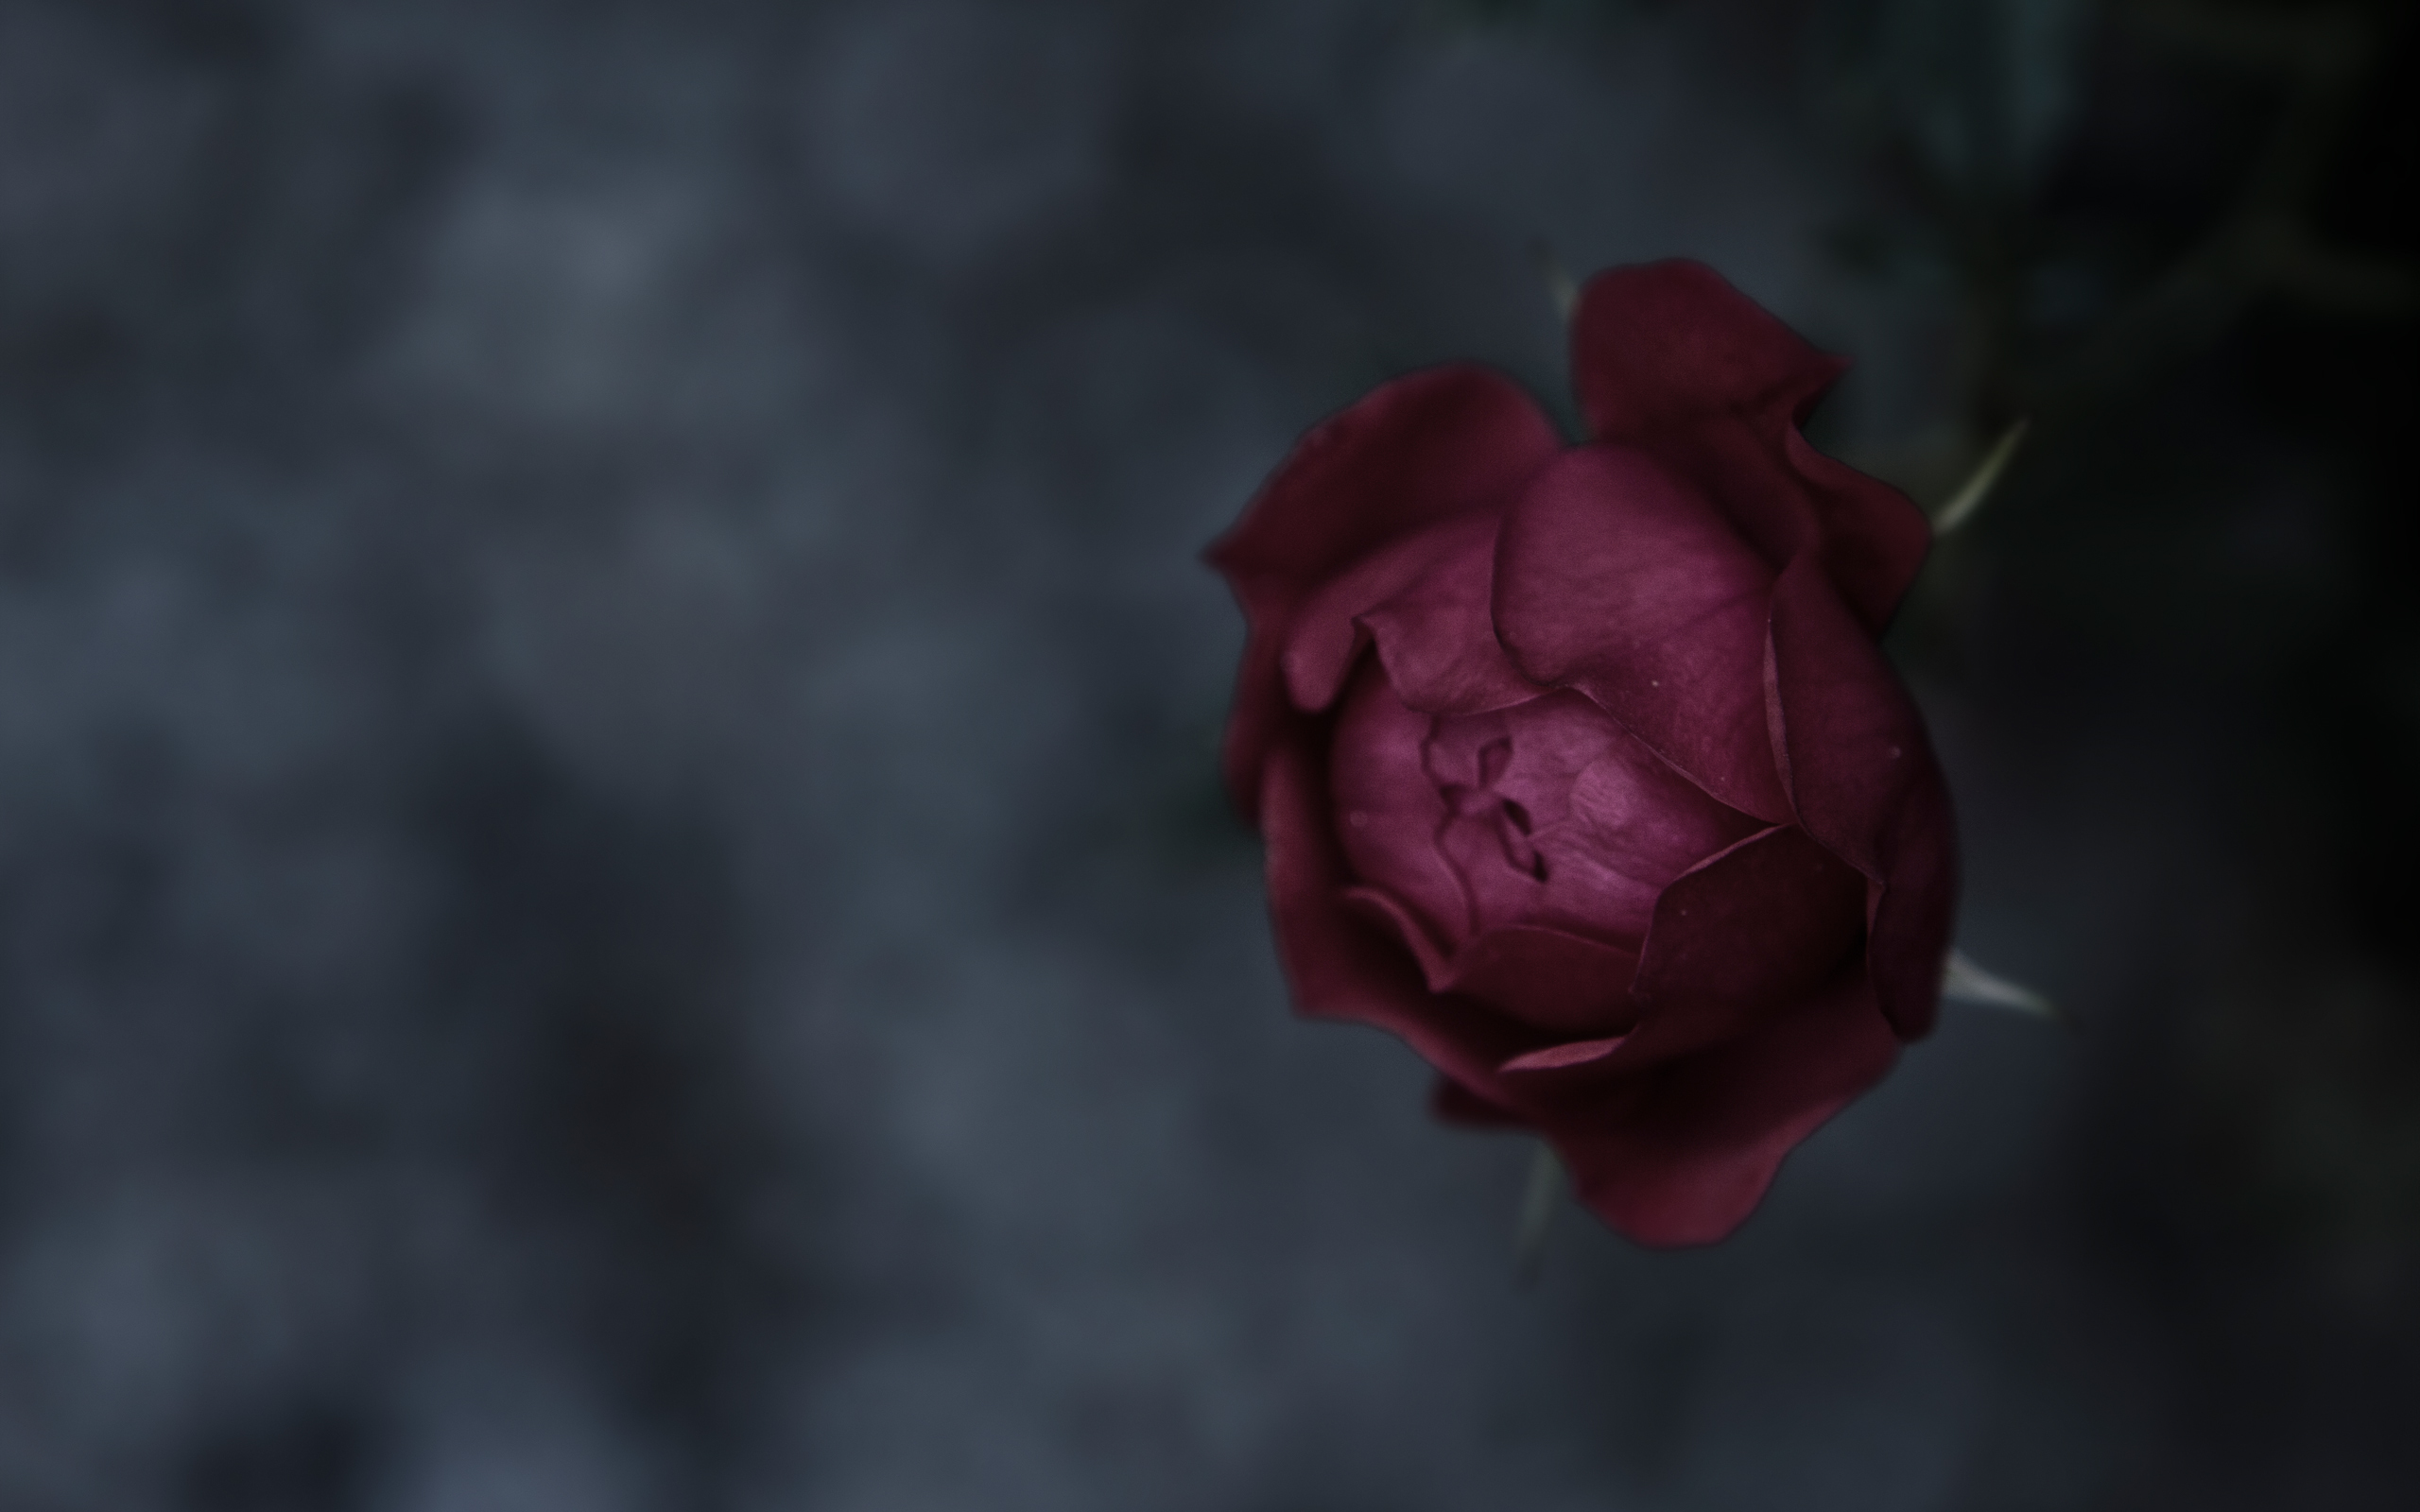 Rose, bud, petals, stems, focus, close up, background, texture, mood, rose, flower, beautiful